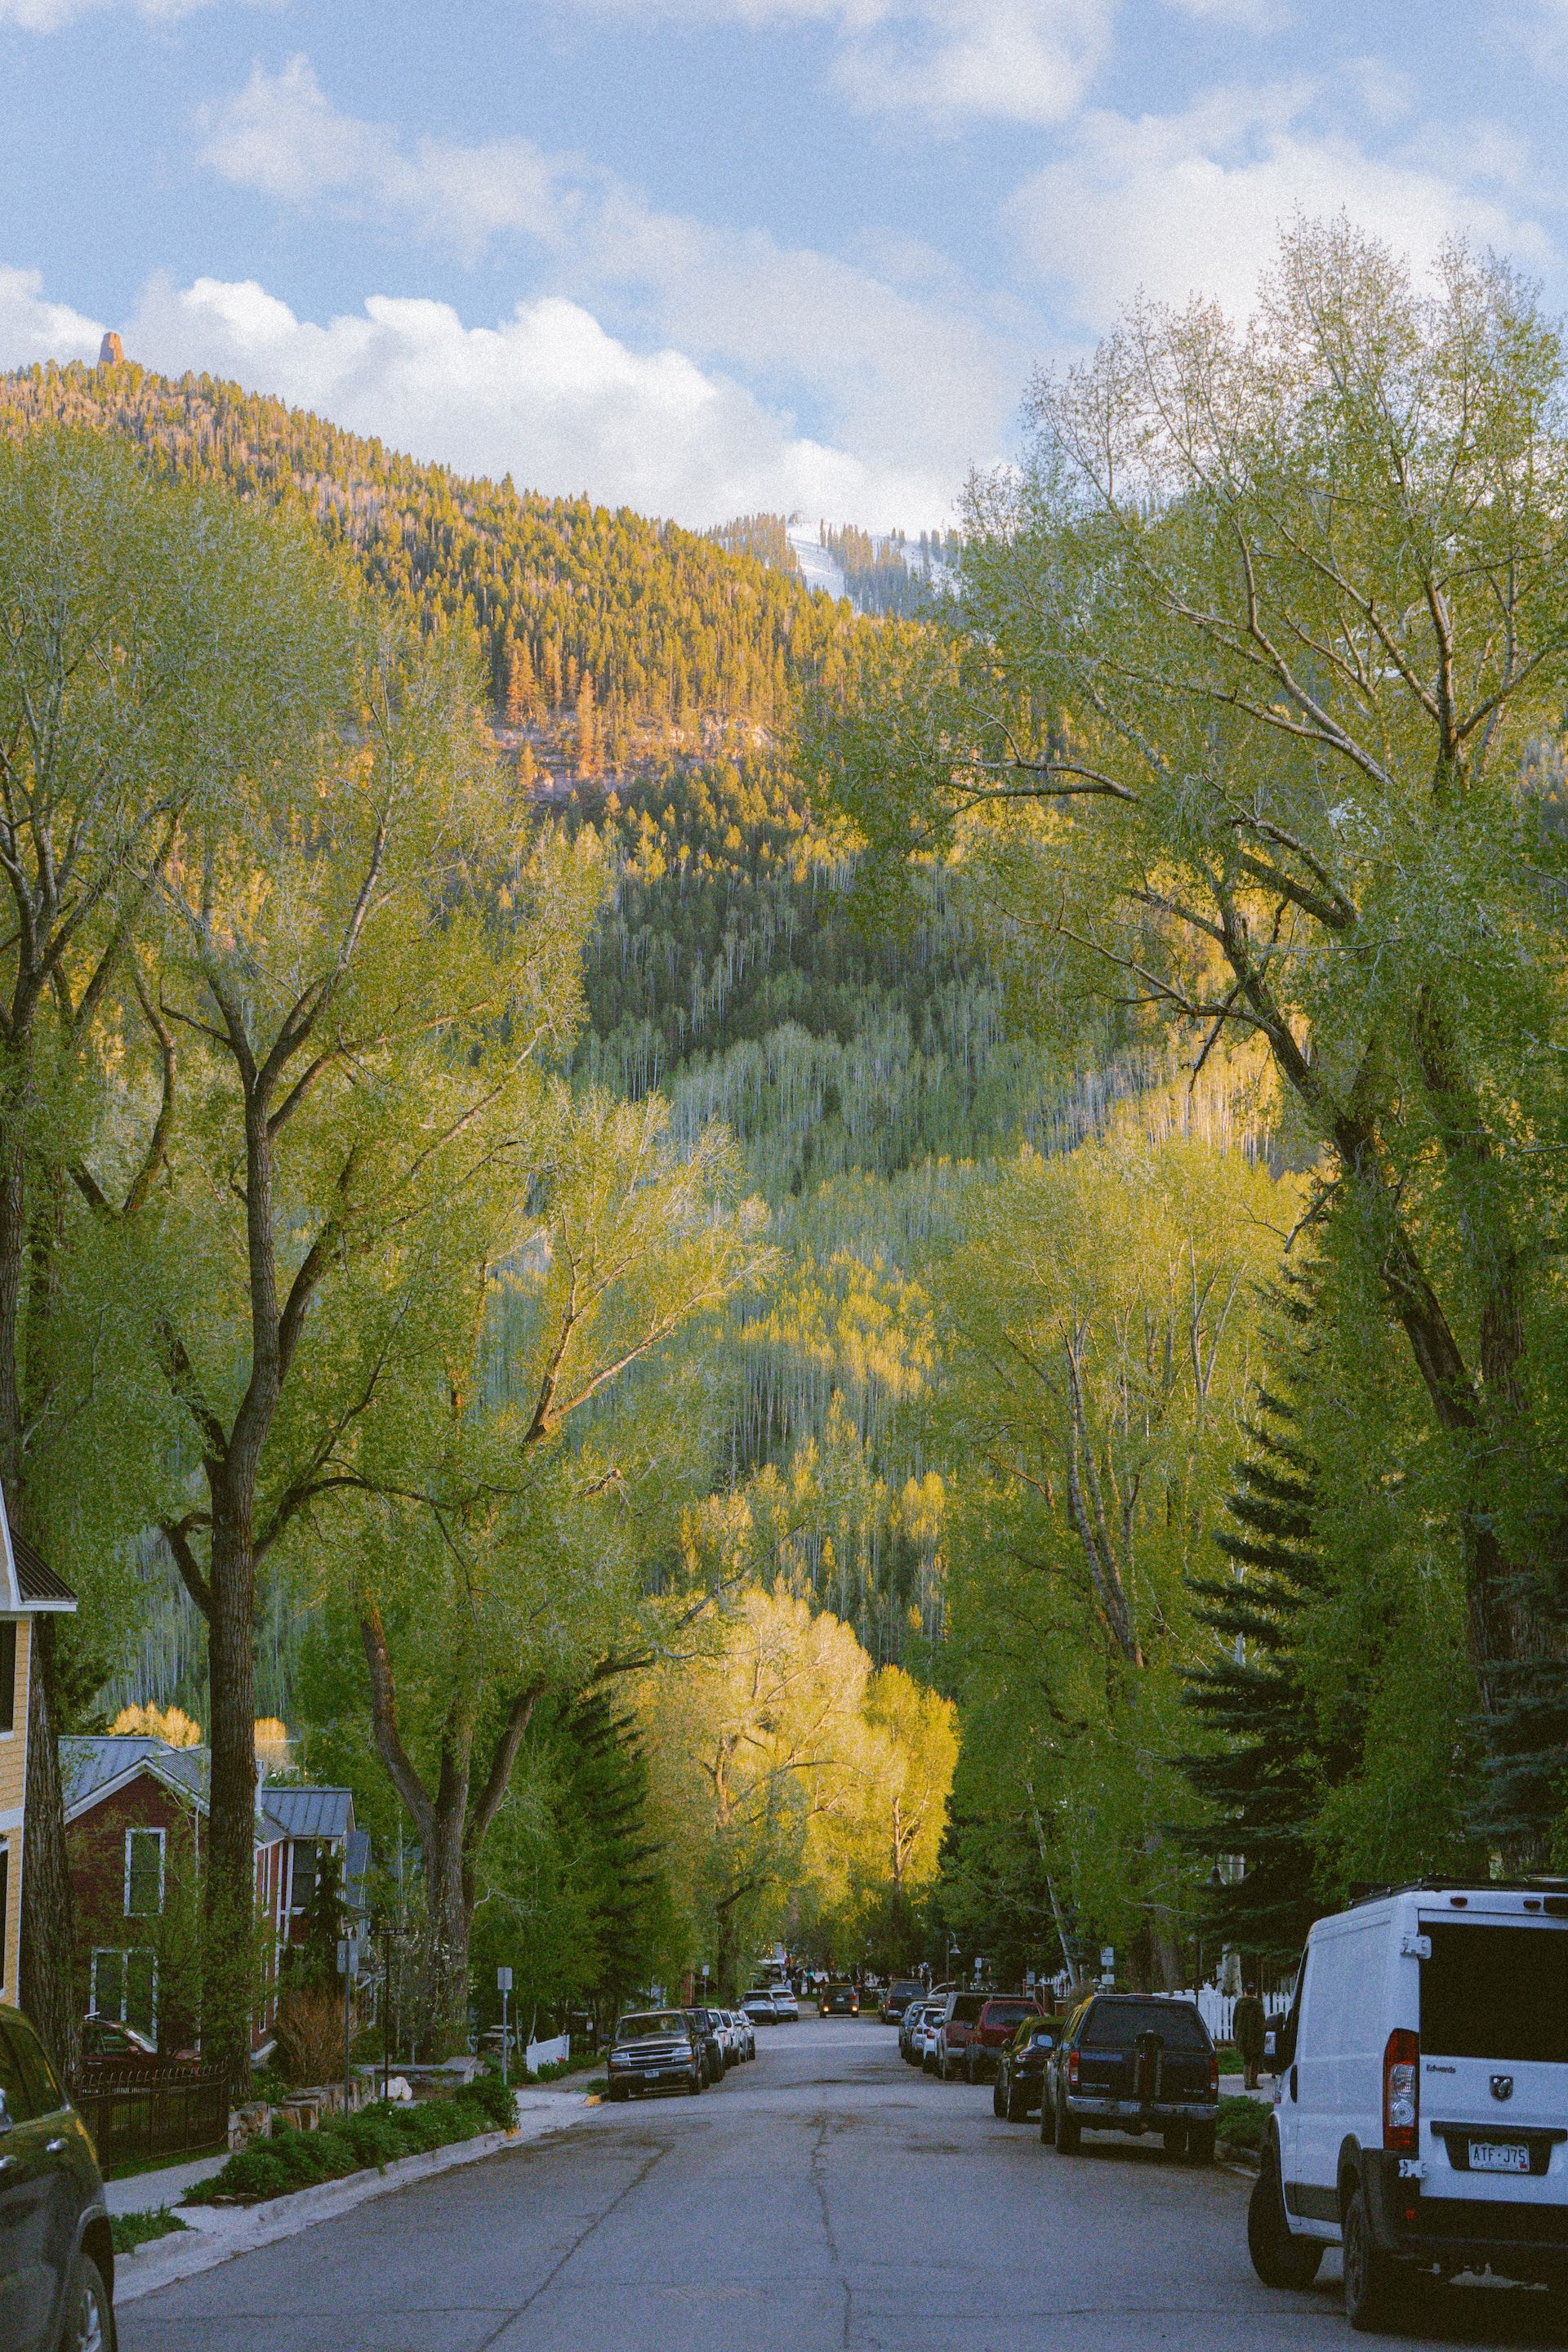 Trees lining a street in Telluride, Colorado